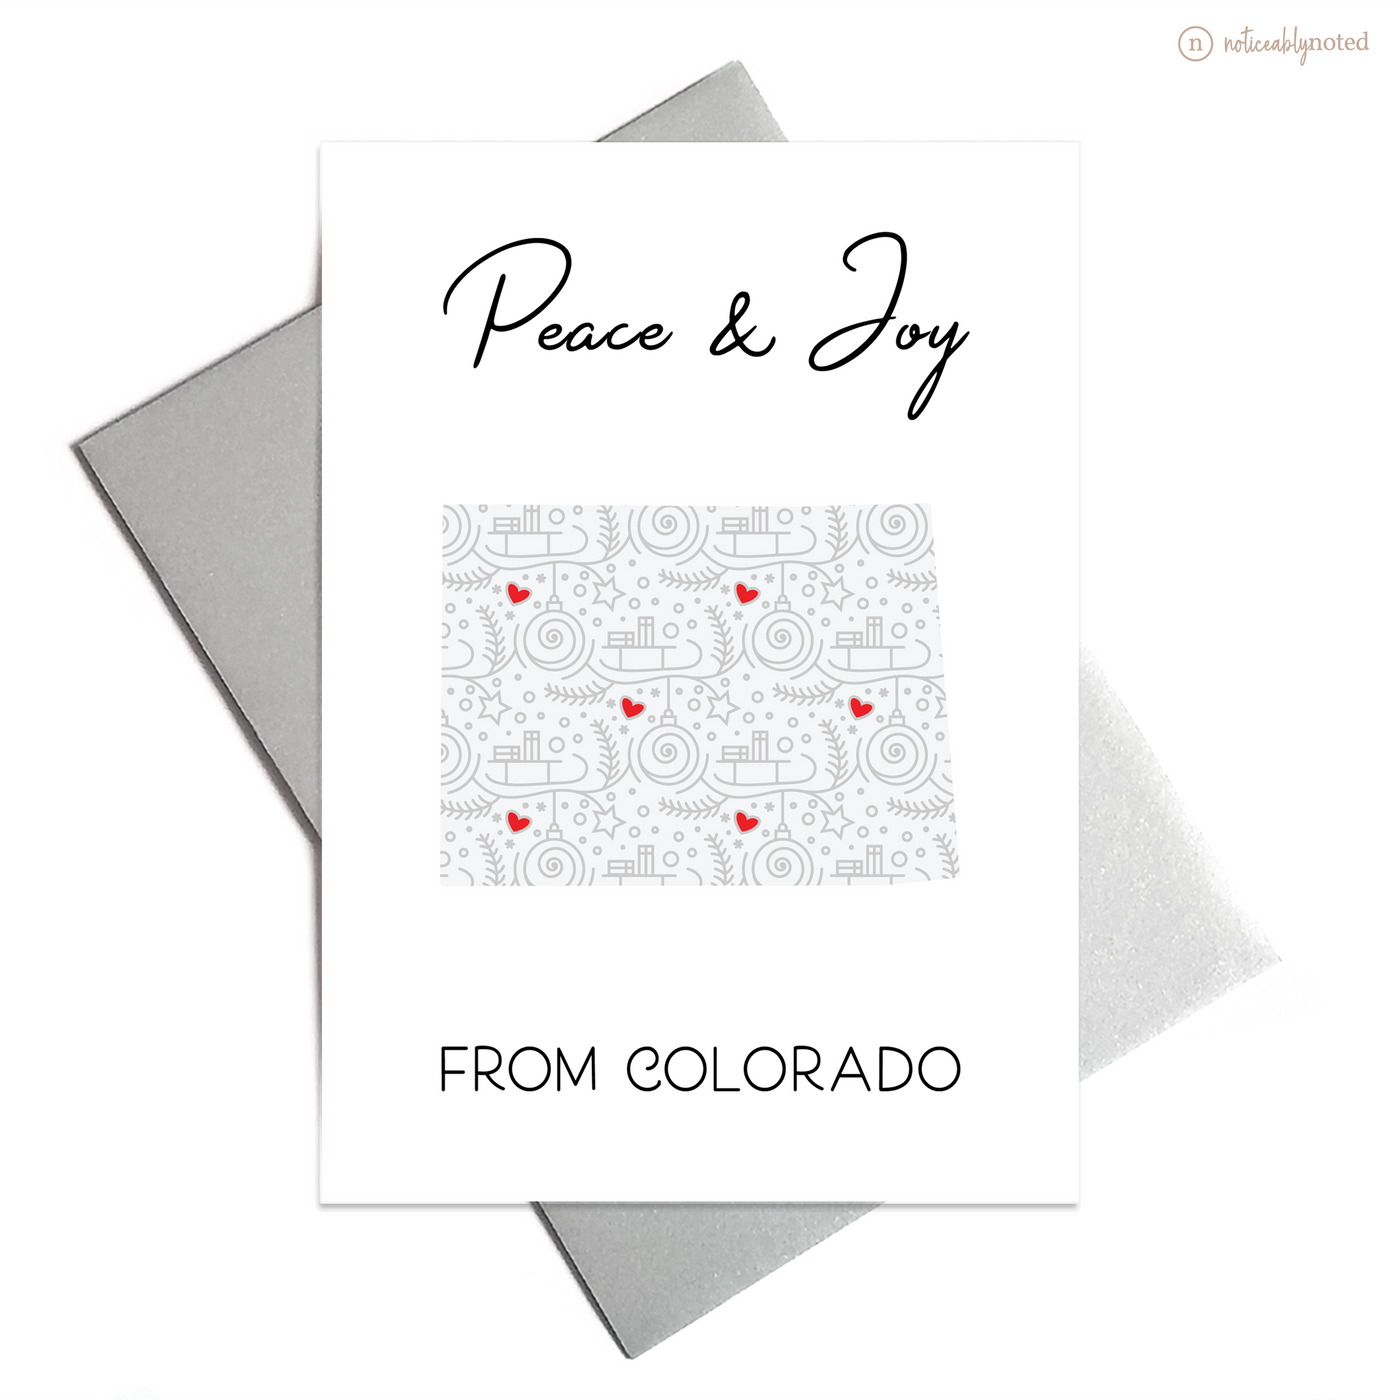 Colorado Holiday Card | Noticeably Noted